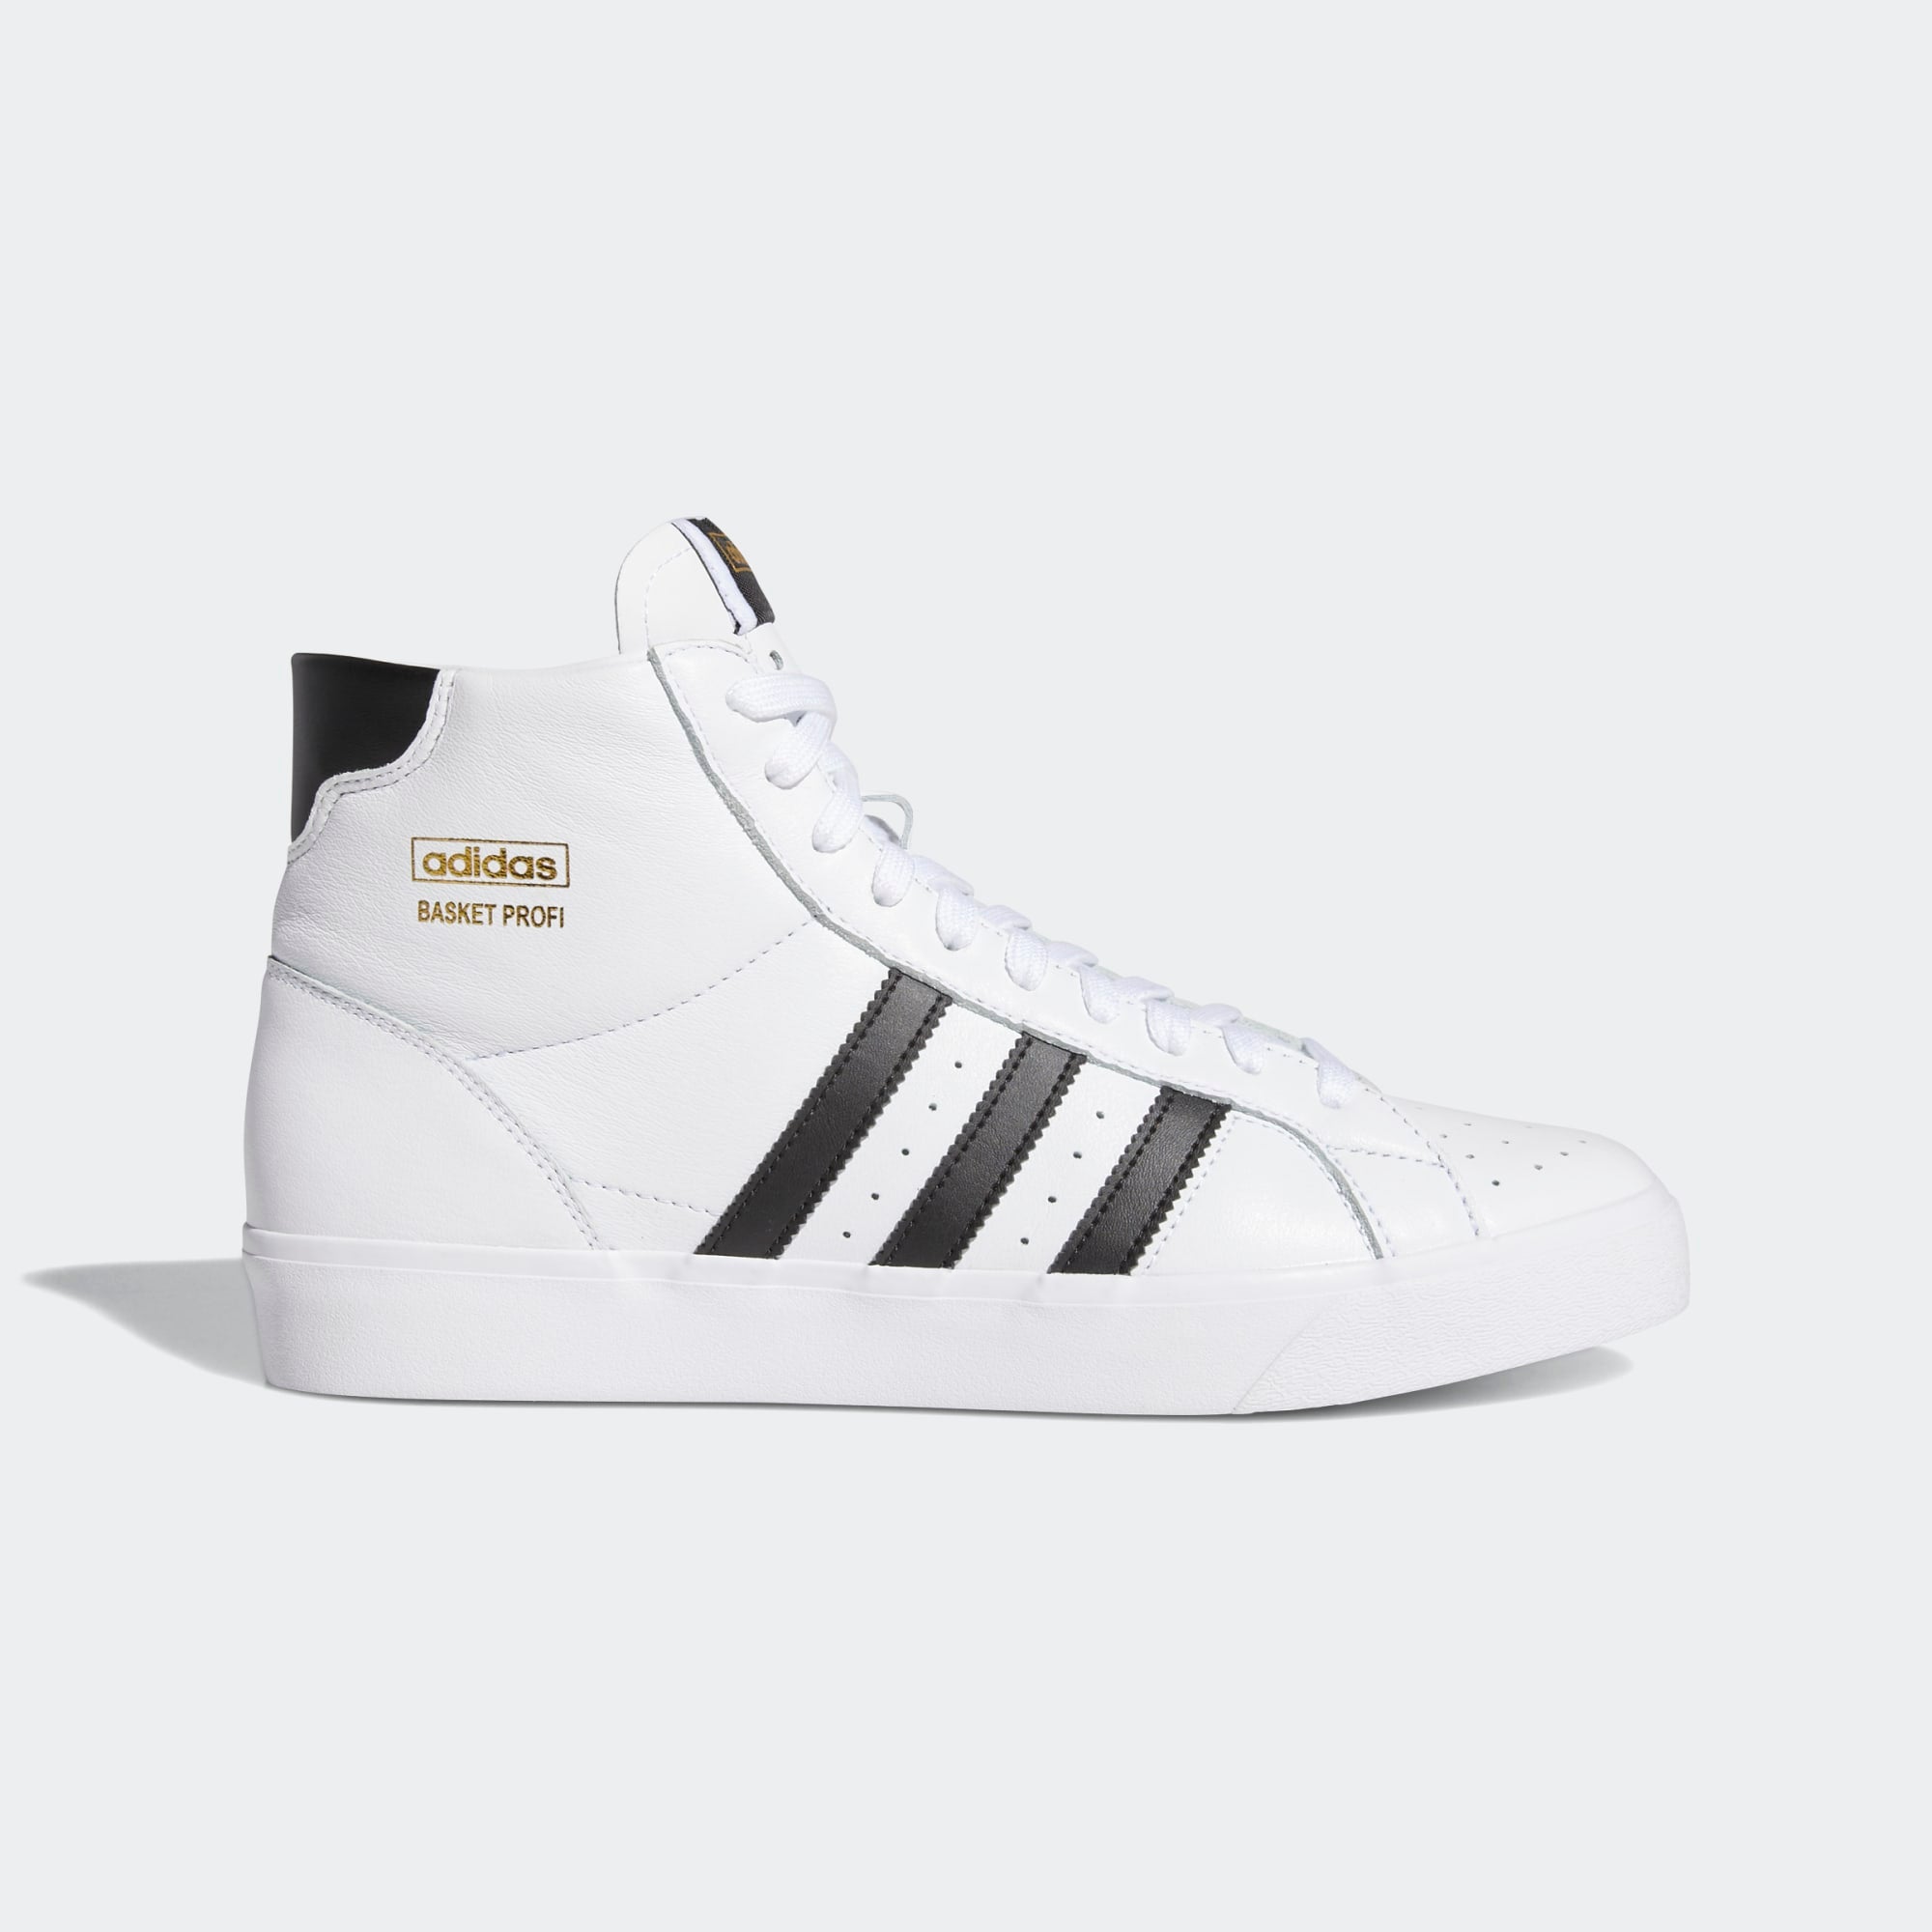 Adidas Originals Basket Profi Shoes in White / Black / Gold [FW3108] Find Your Sole